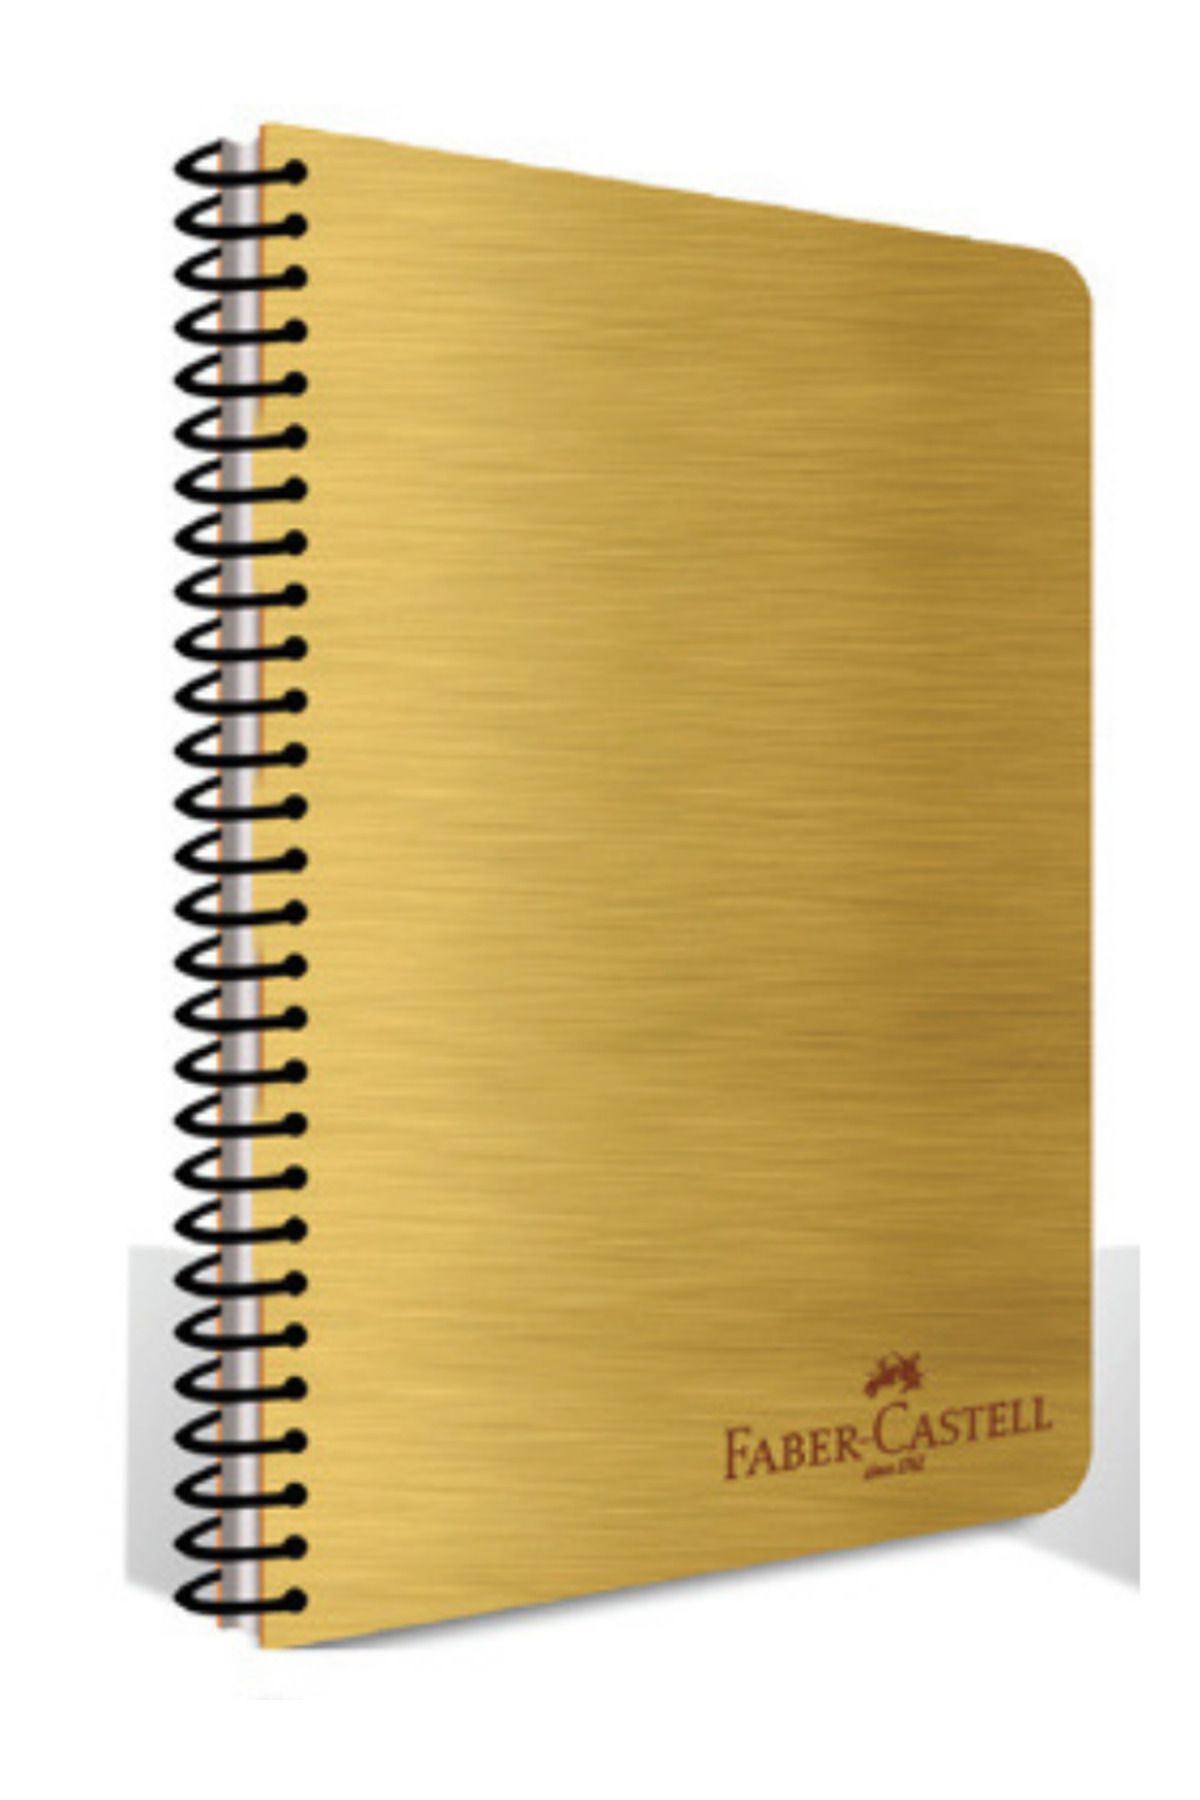 Faber Castell PLASTİK KAPAKLI SPİRALLİ DEFTER METALİK RENKLER A4 100 YP. ÇİZGİLİ – METALİK SARI